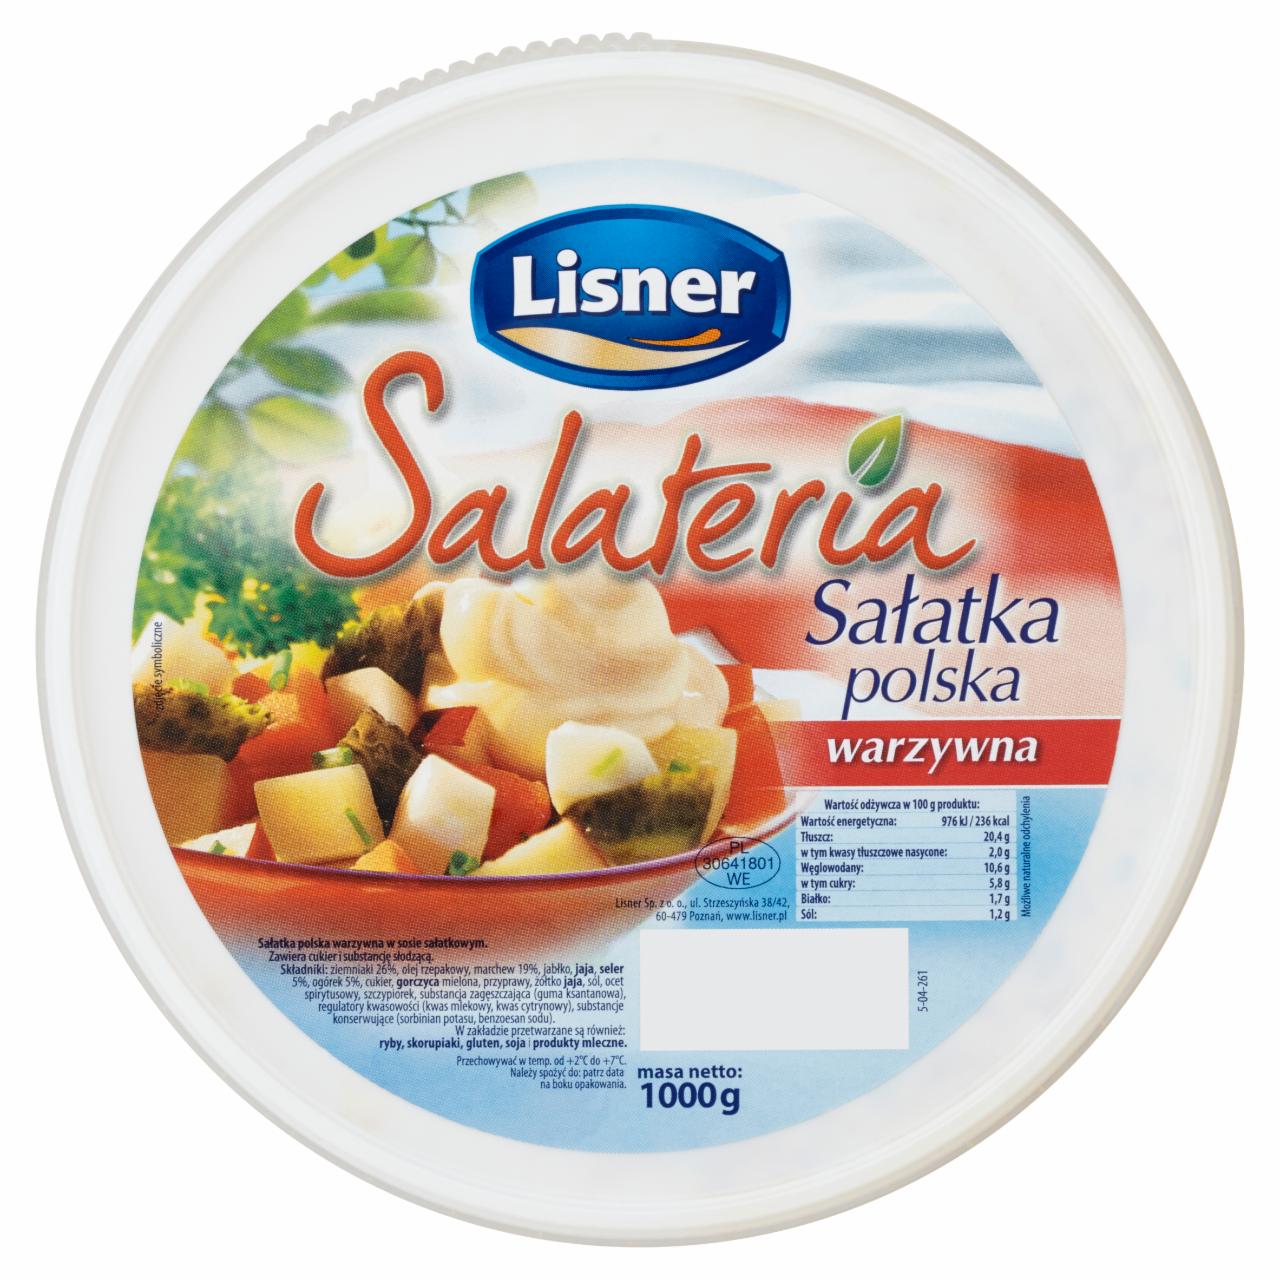 Photo - Lisner Salateria Polish Style Vegetable Salad 1000 g